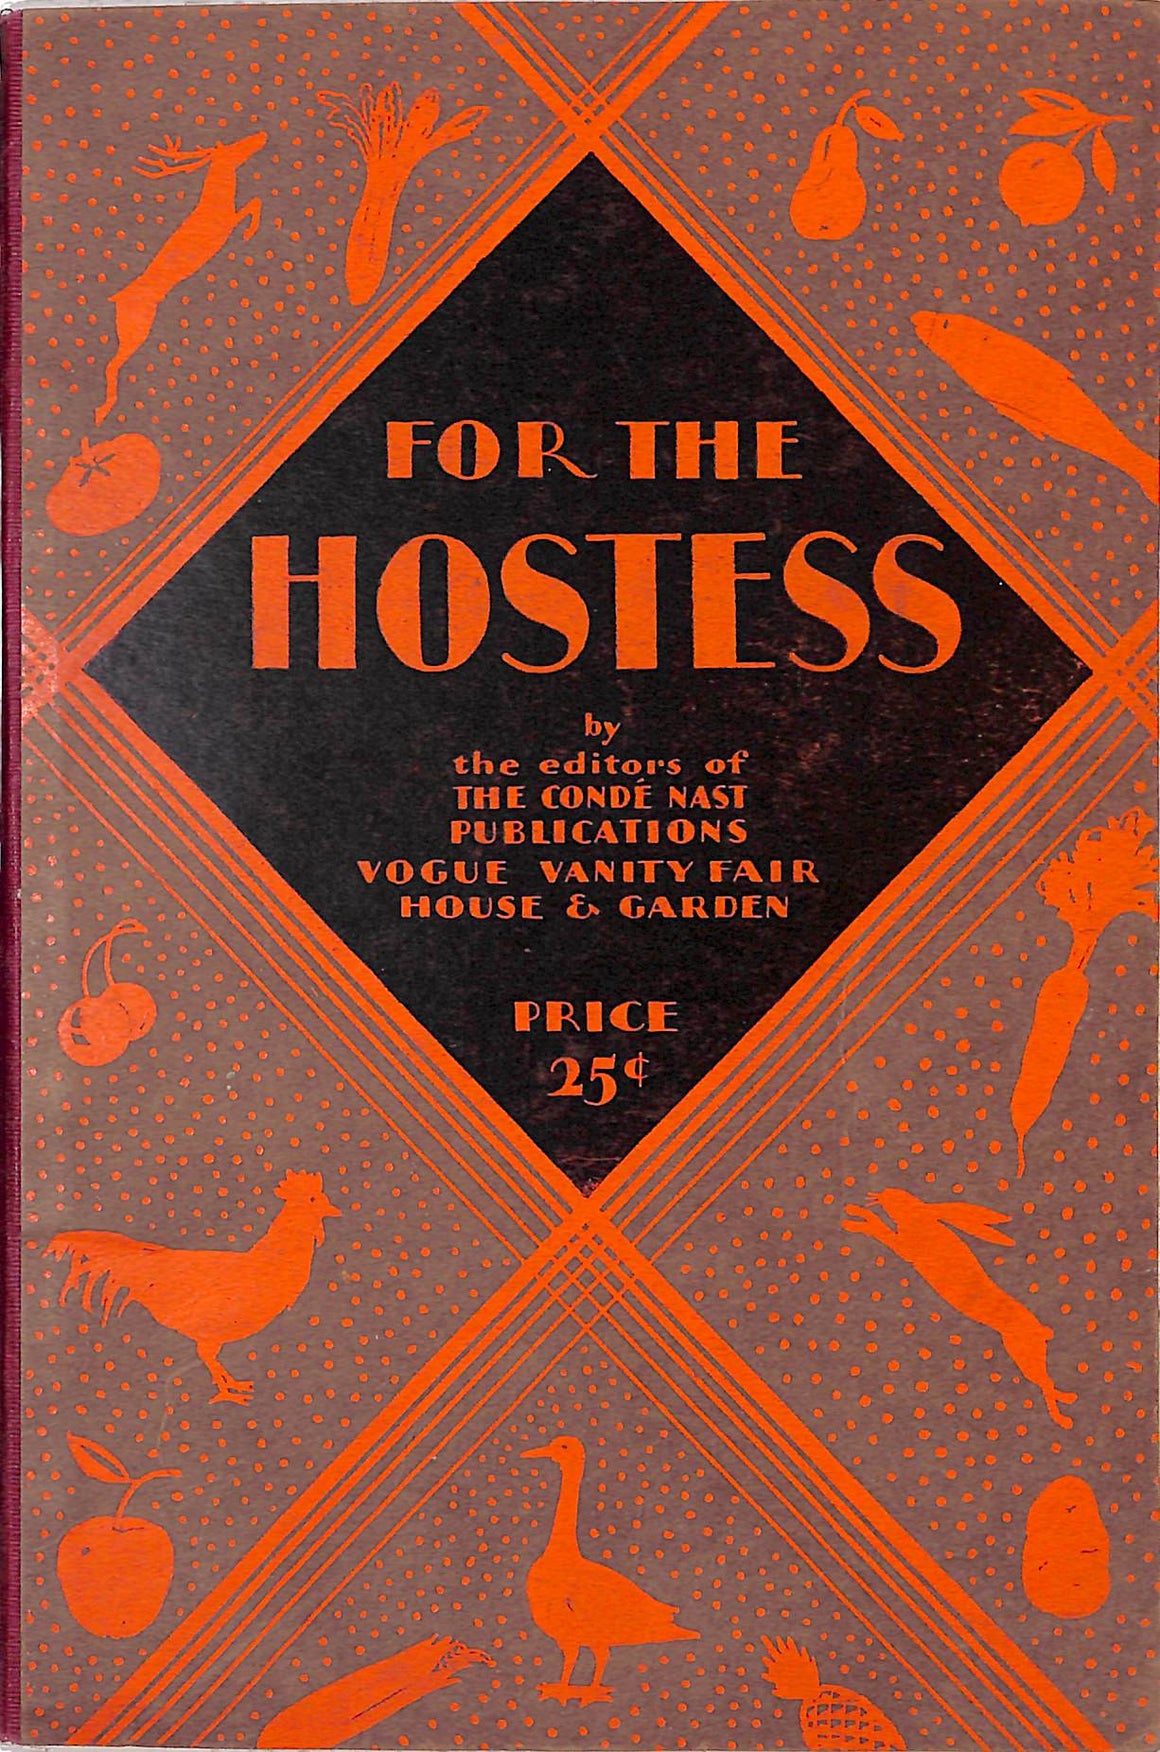 "For The Hostess: A Handbook For Entertaining" 1928